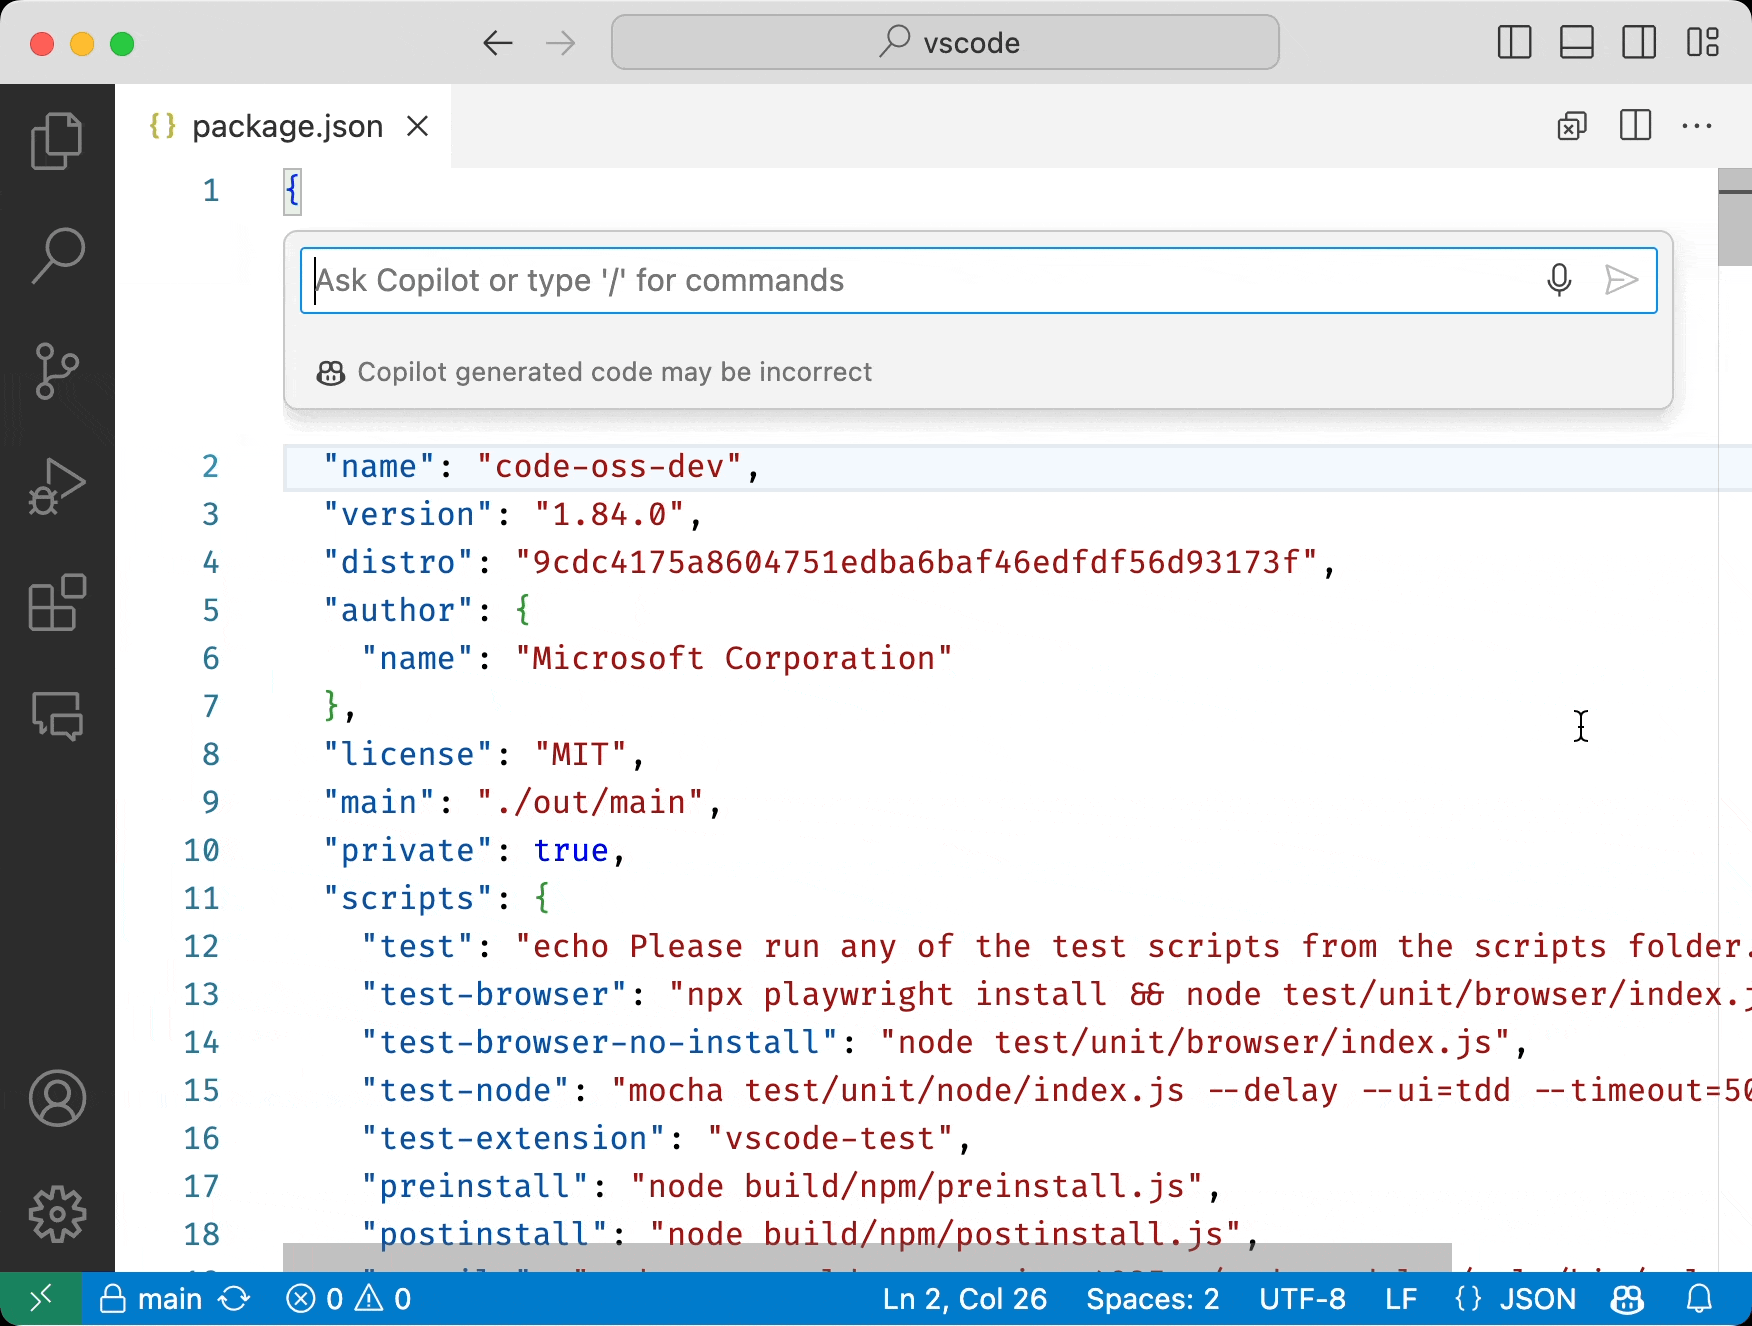 New scripting colors? Since when? - Scripting Support - Developer Forum